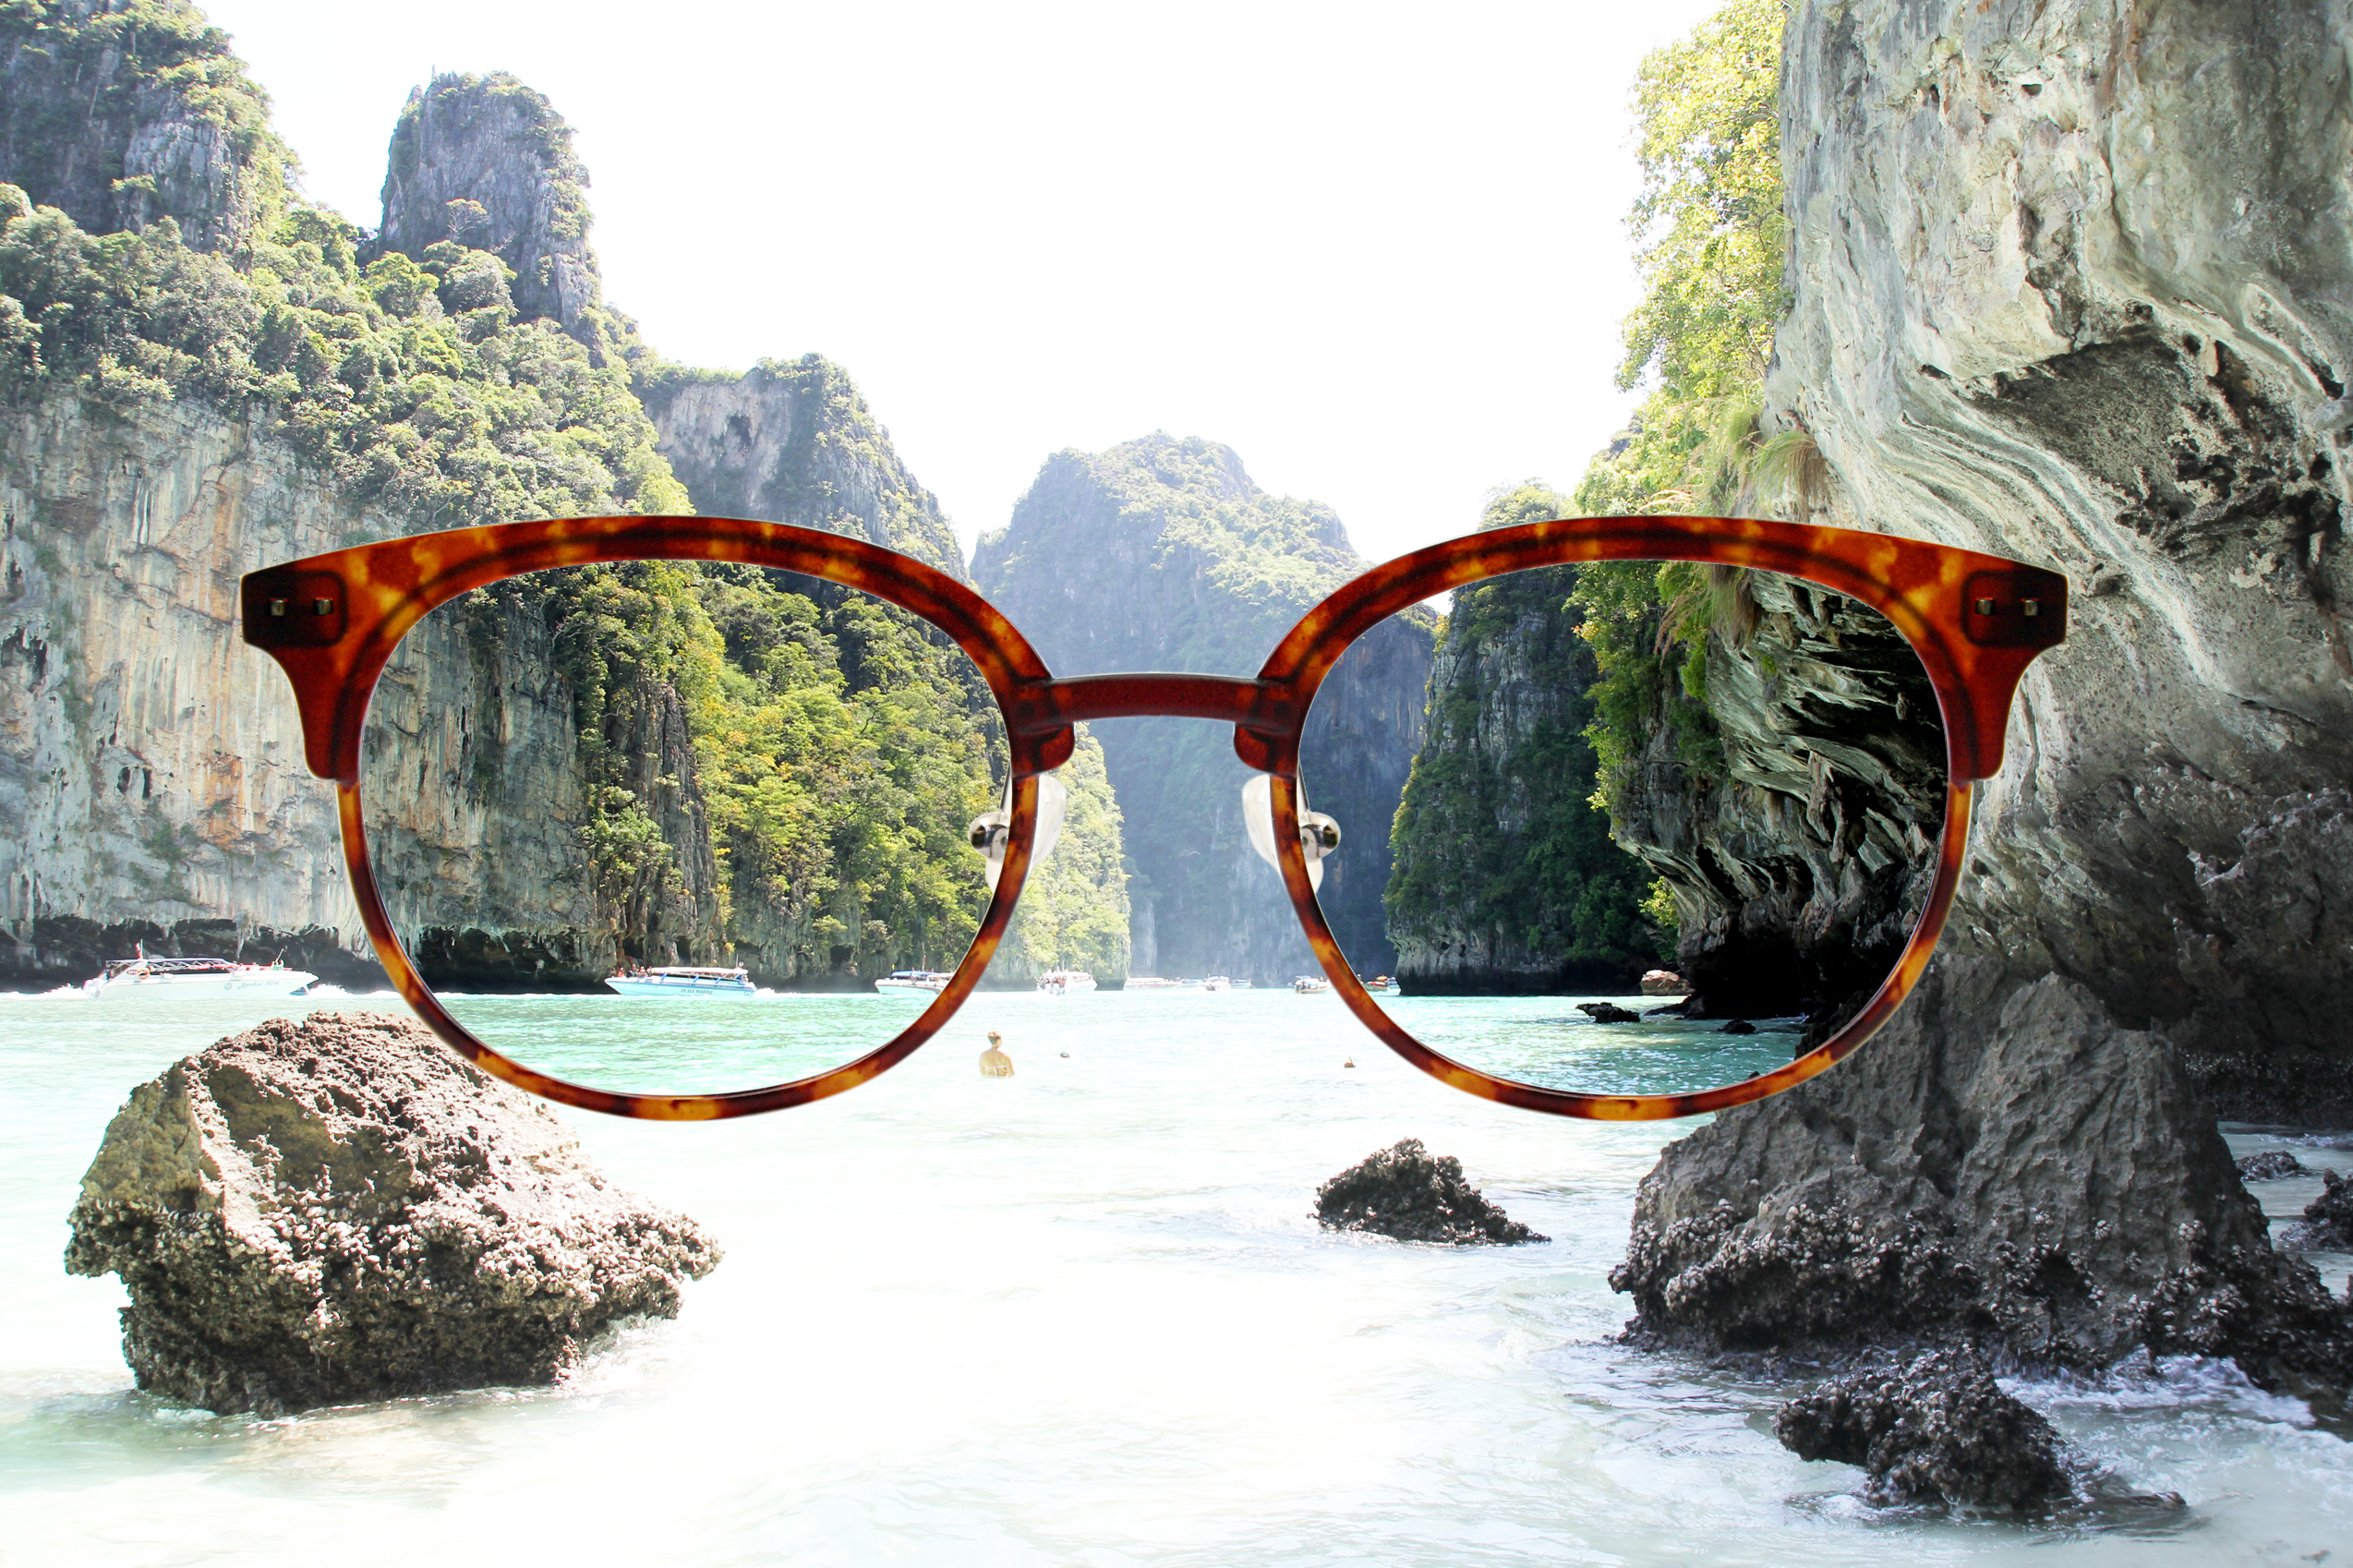 Buy Designer Sunglasses Online | Shade Station